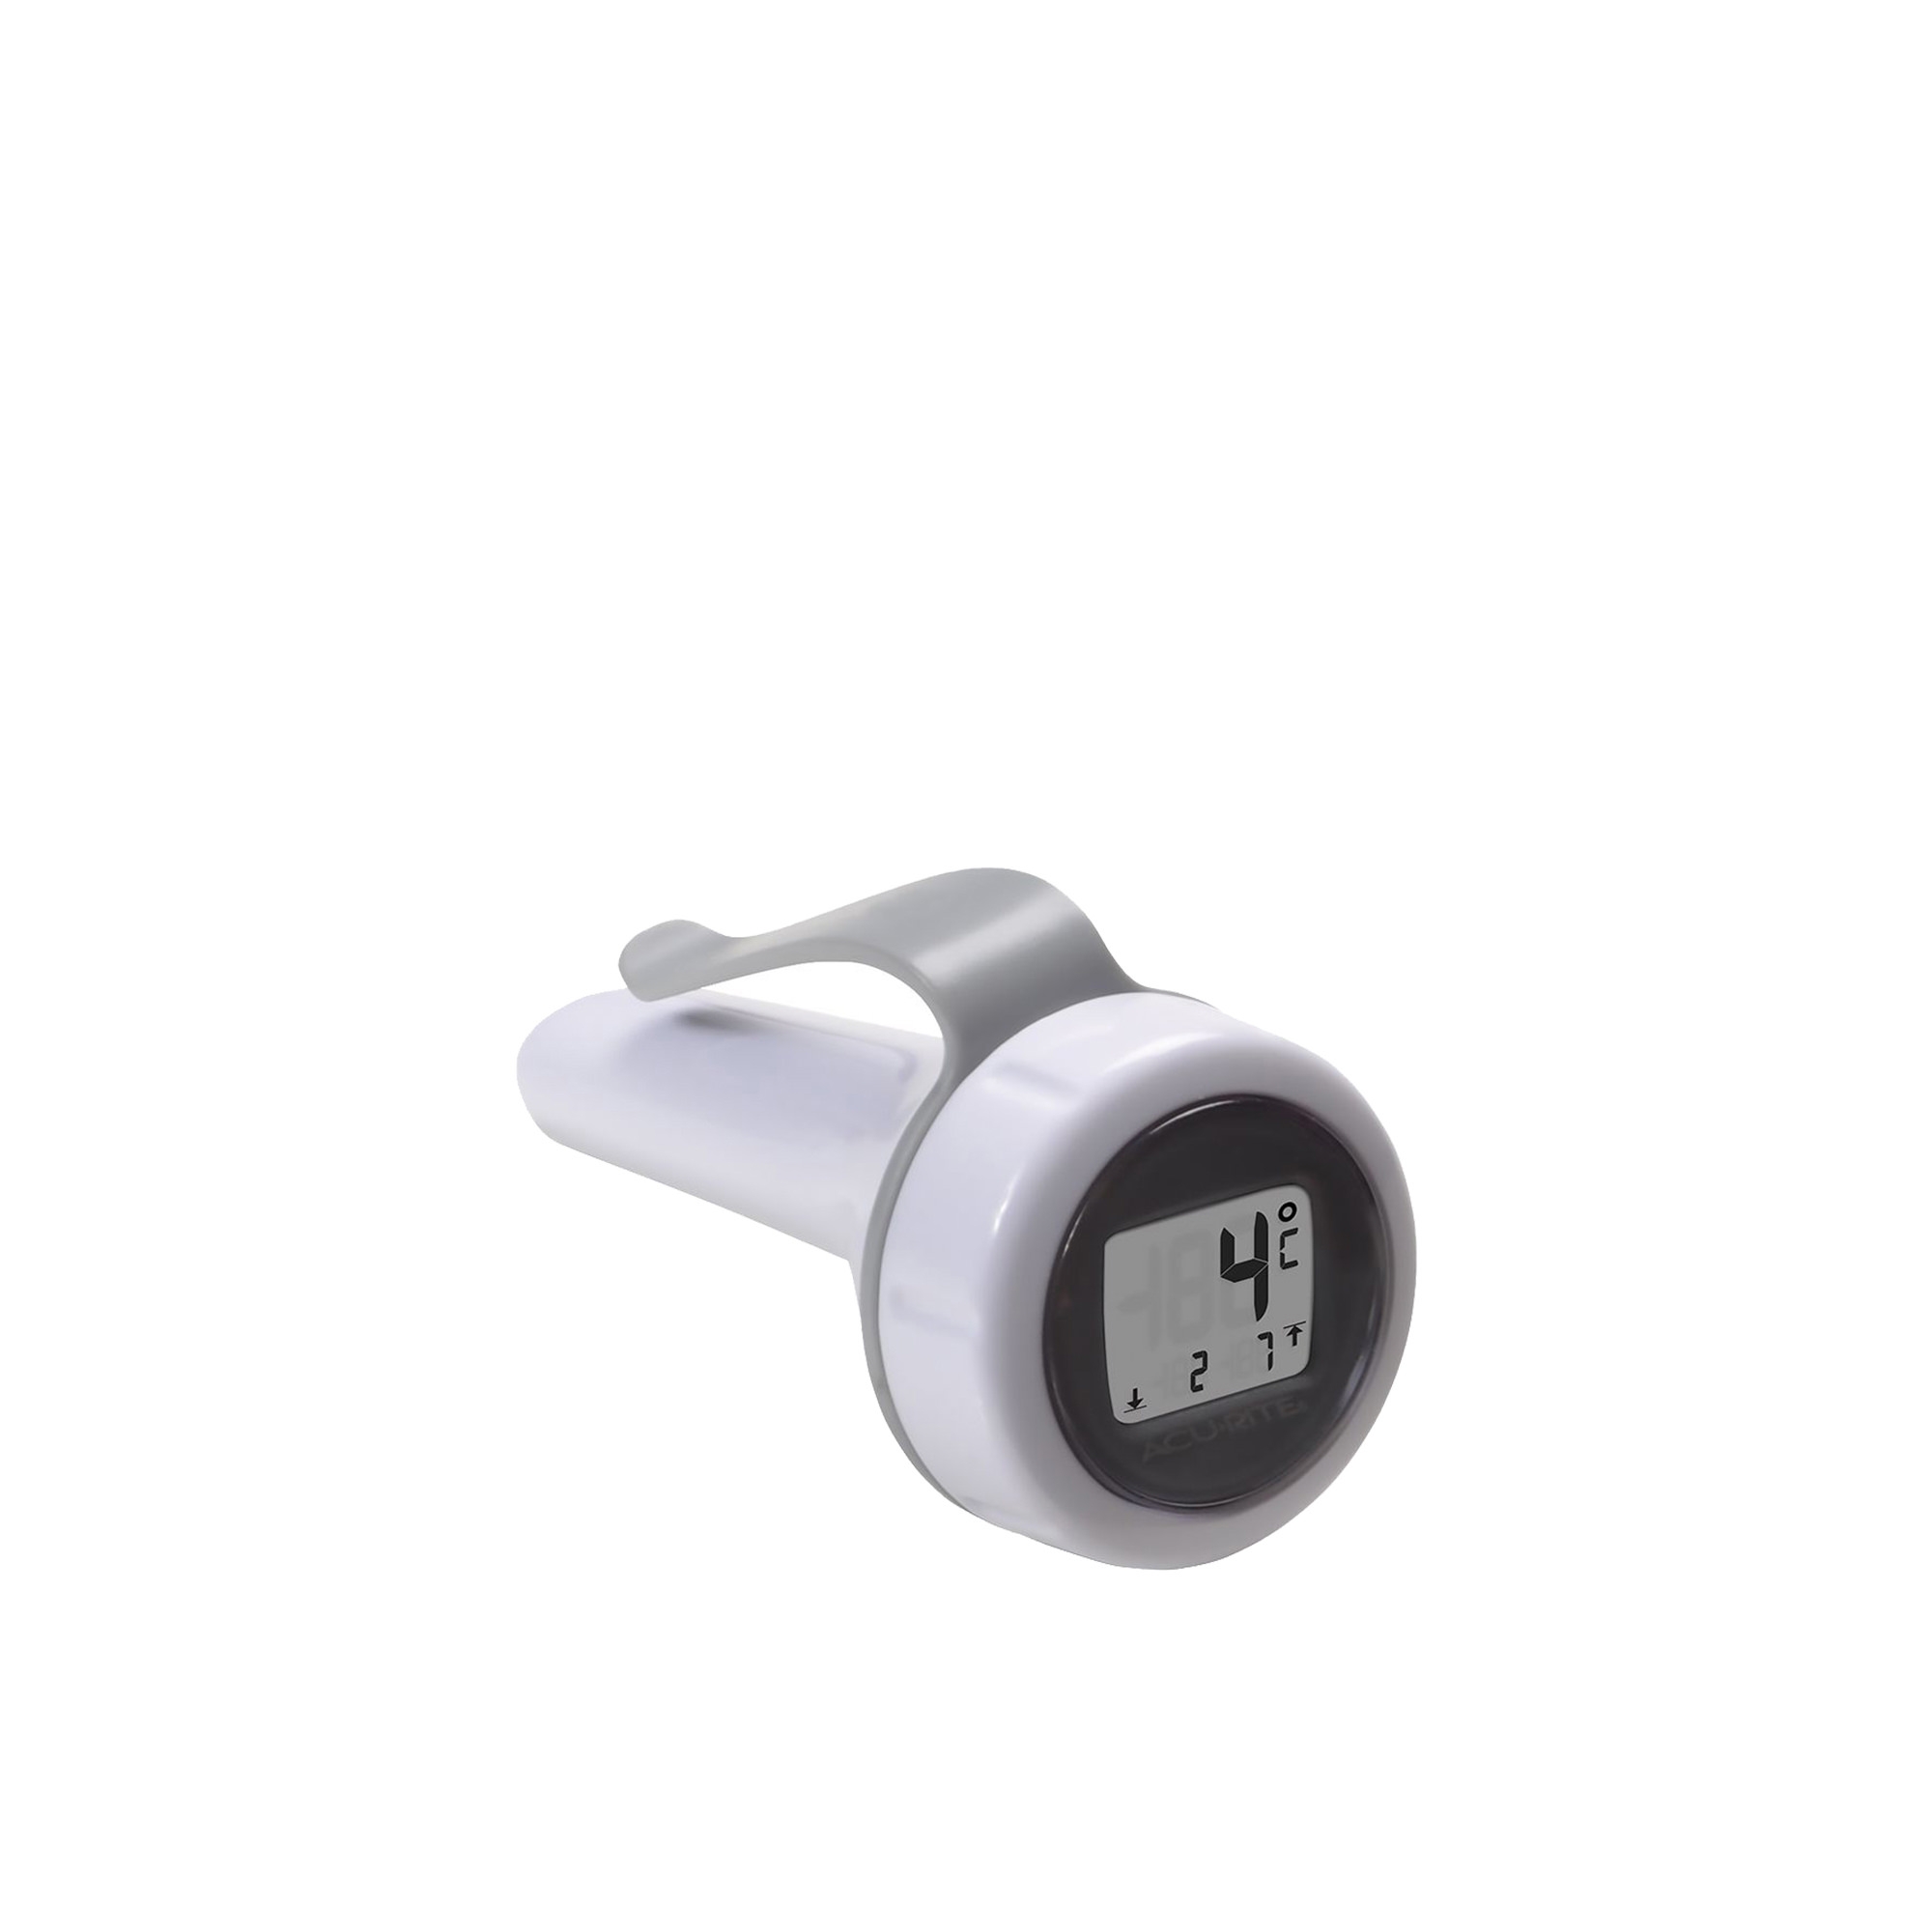 Acurite Digital Fridge/Freezer Thermometer Image 1